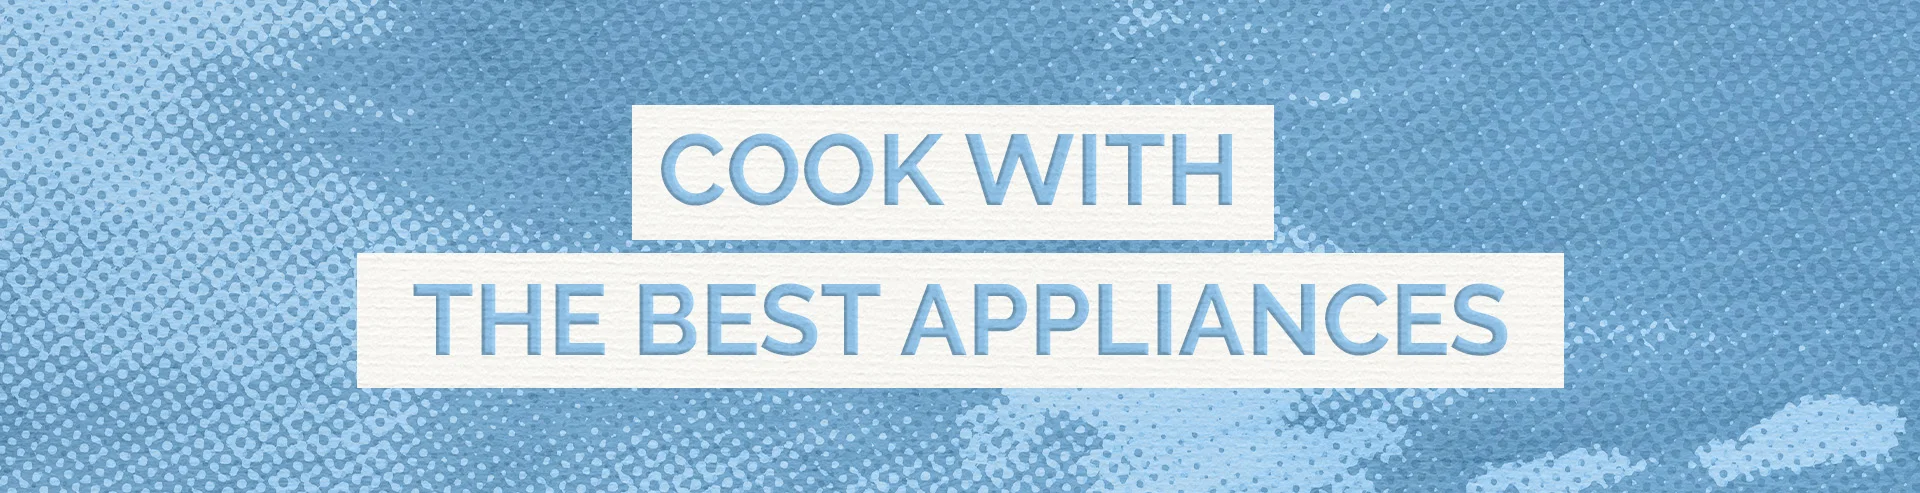 Full-Width-Gift-ideas-Cook-with-the-Best-Appliances-Desktop.webp